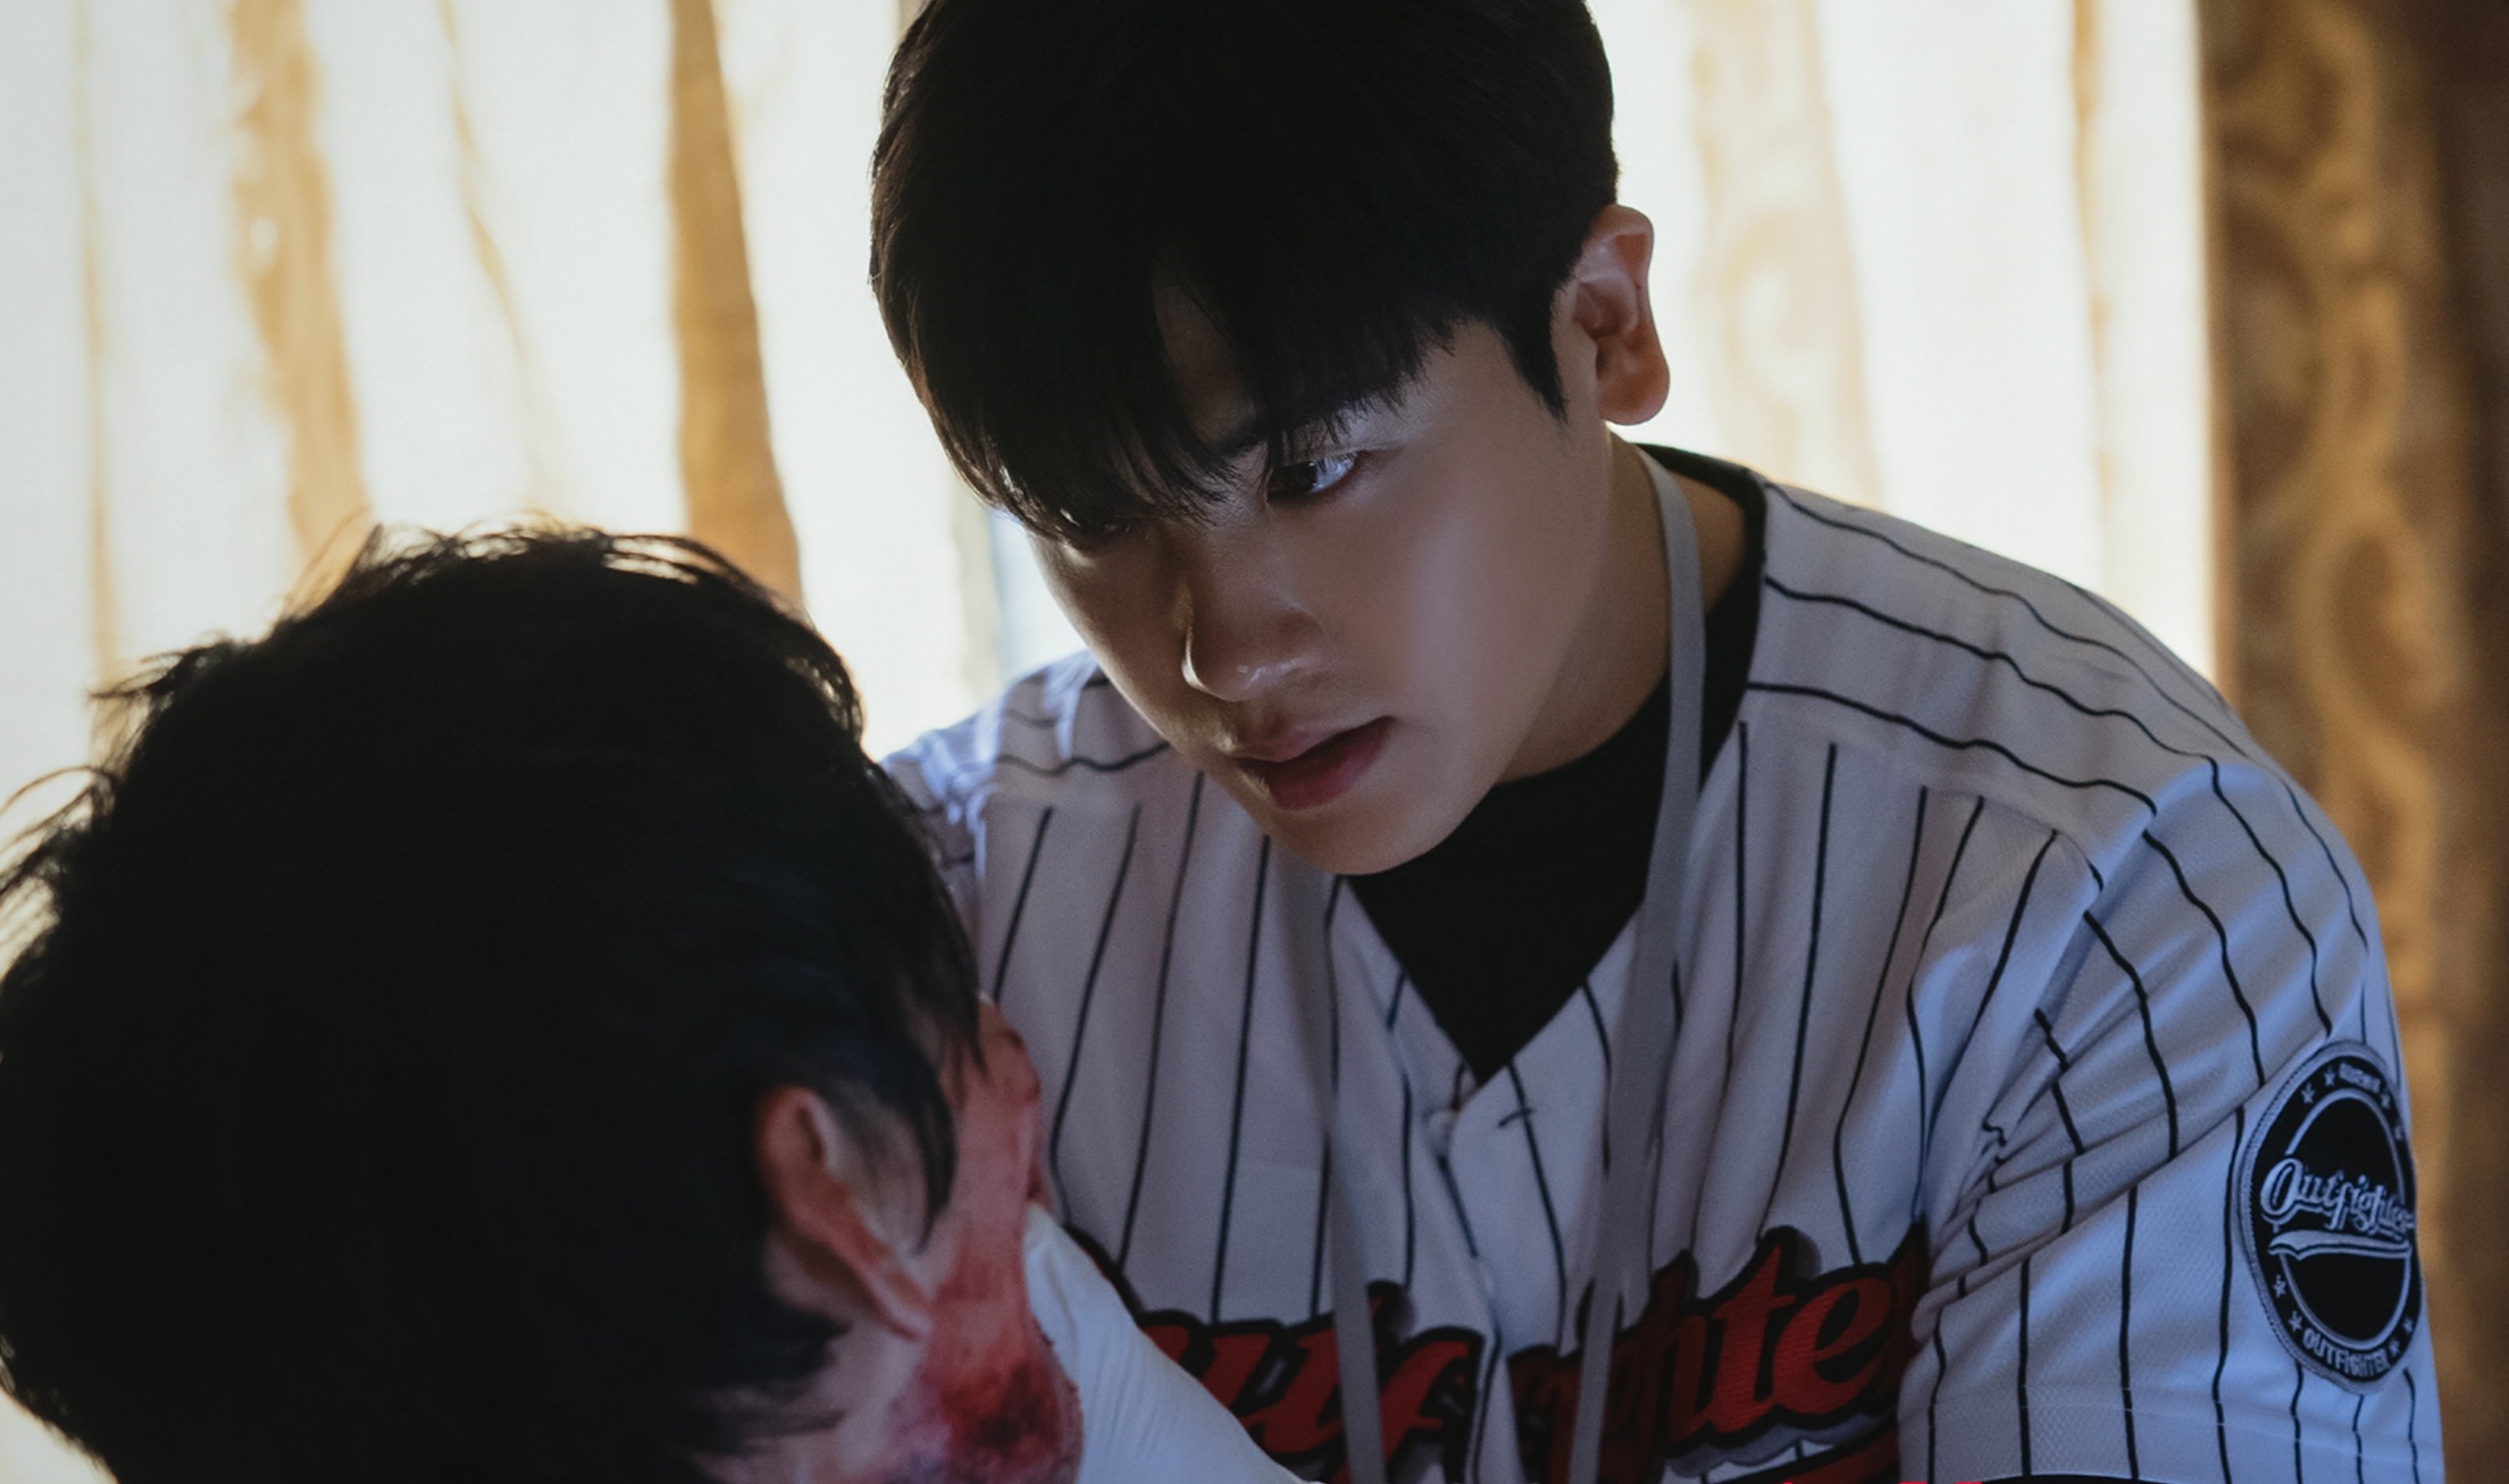 Park Hyung-sik for 'Happiness' K-drama wearing baseball shirt looking as suspect.